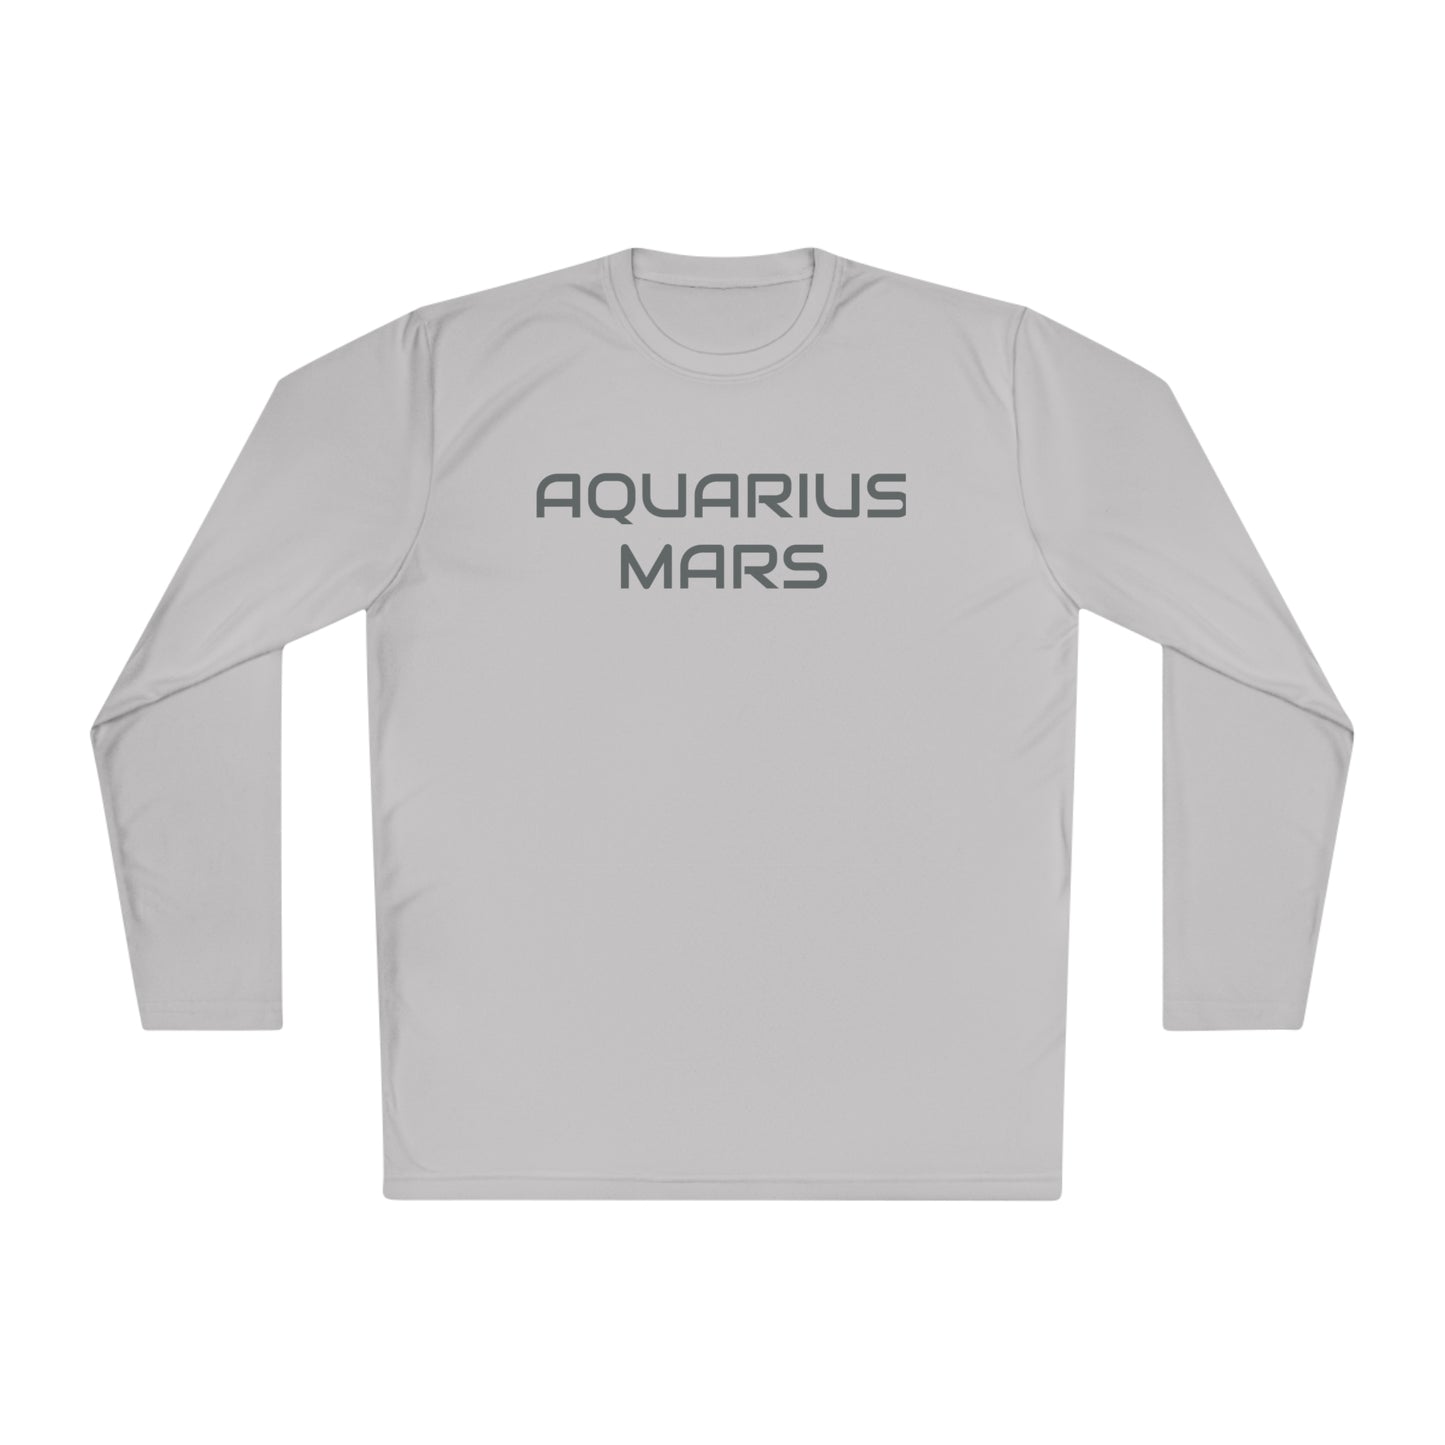 Aquarius Mars Lightweight Long Sleeve Tee